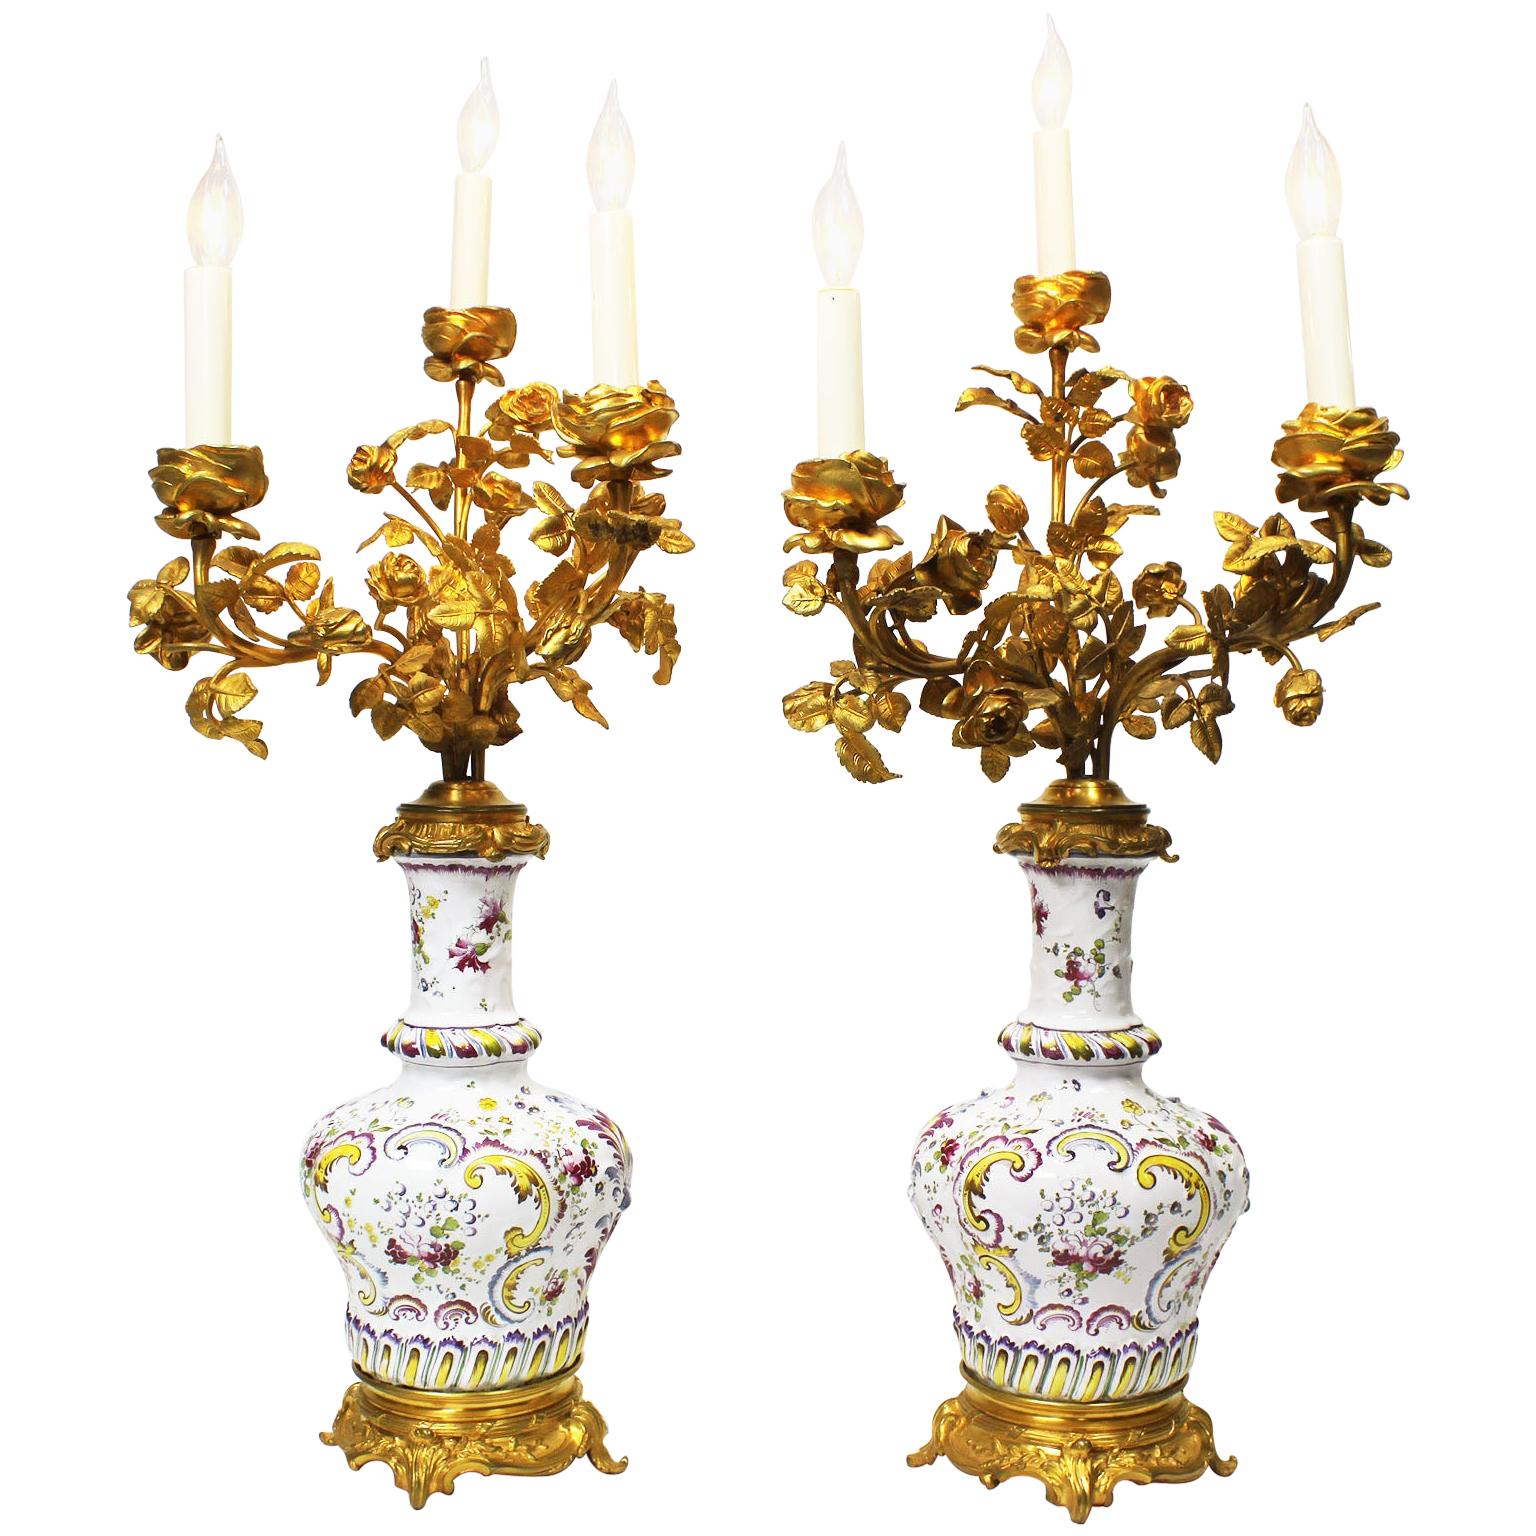 Pair of 19th Century Gilt-Bronze & Faience Porcelain Table Lamp Candelabras